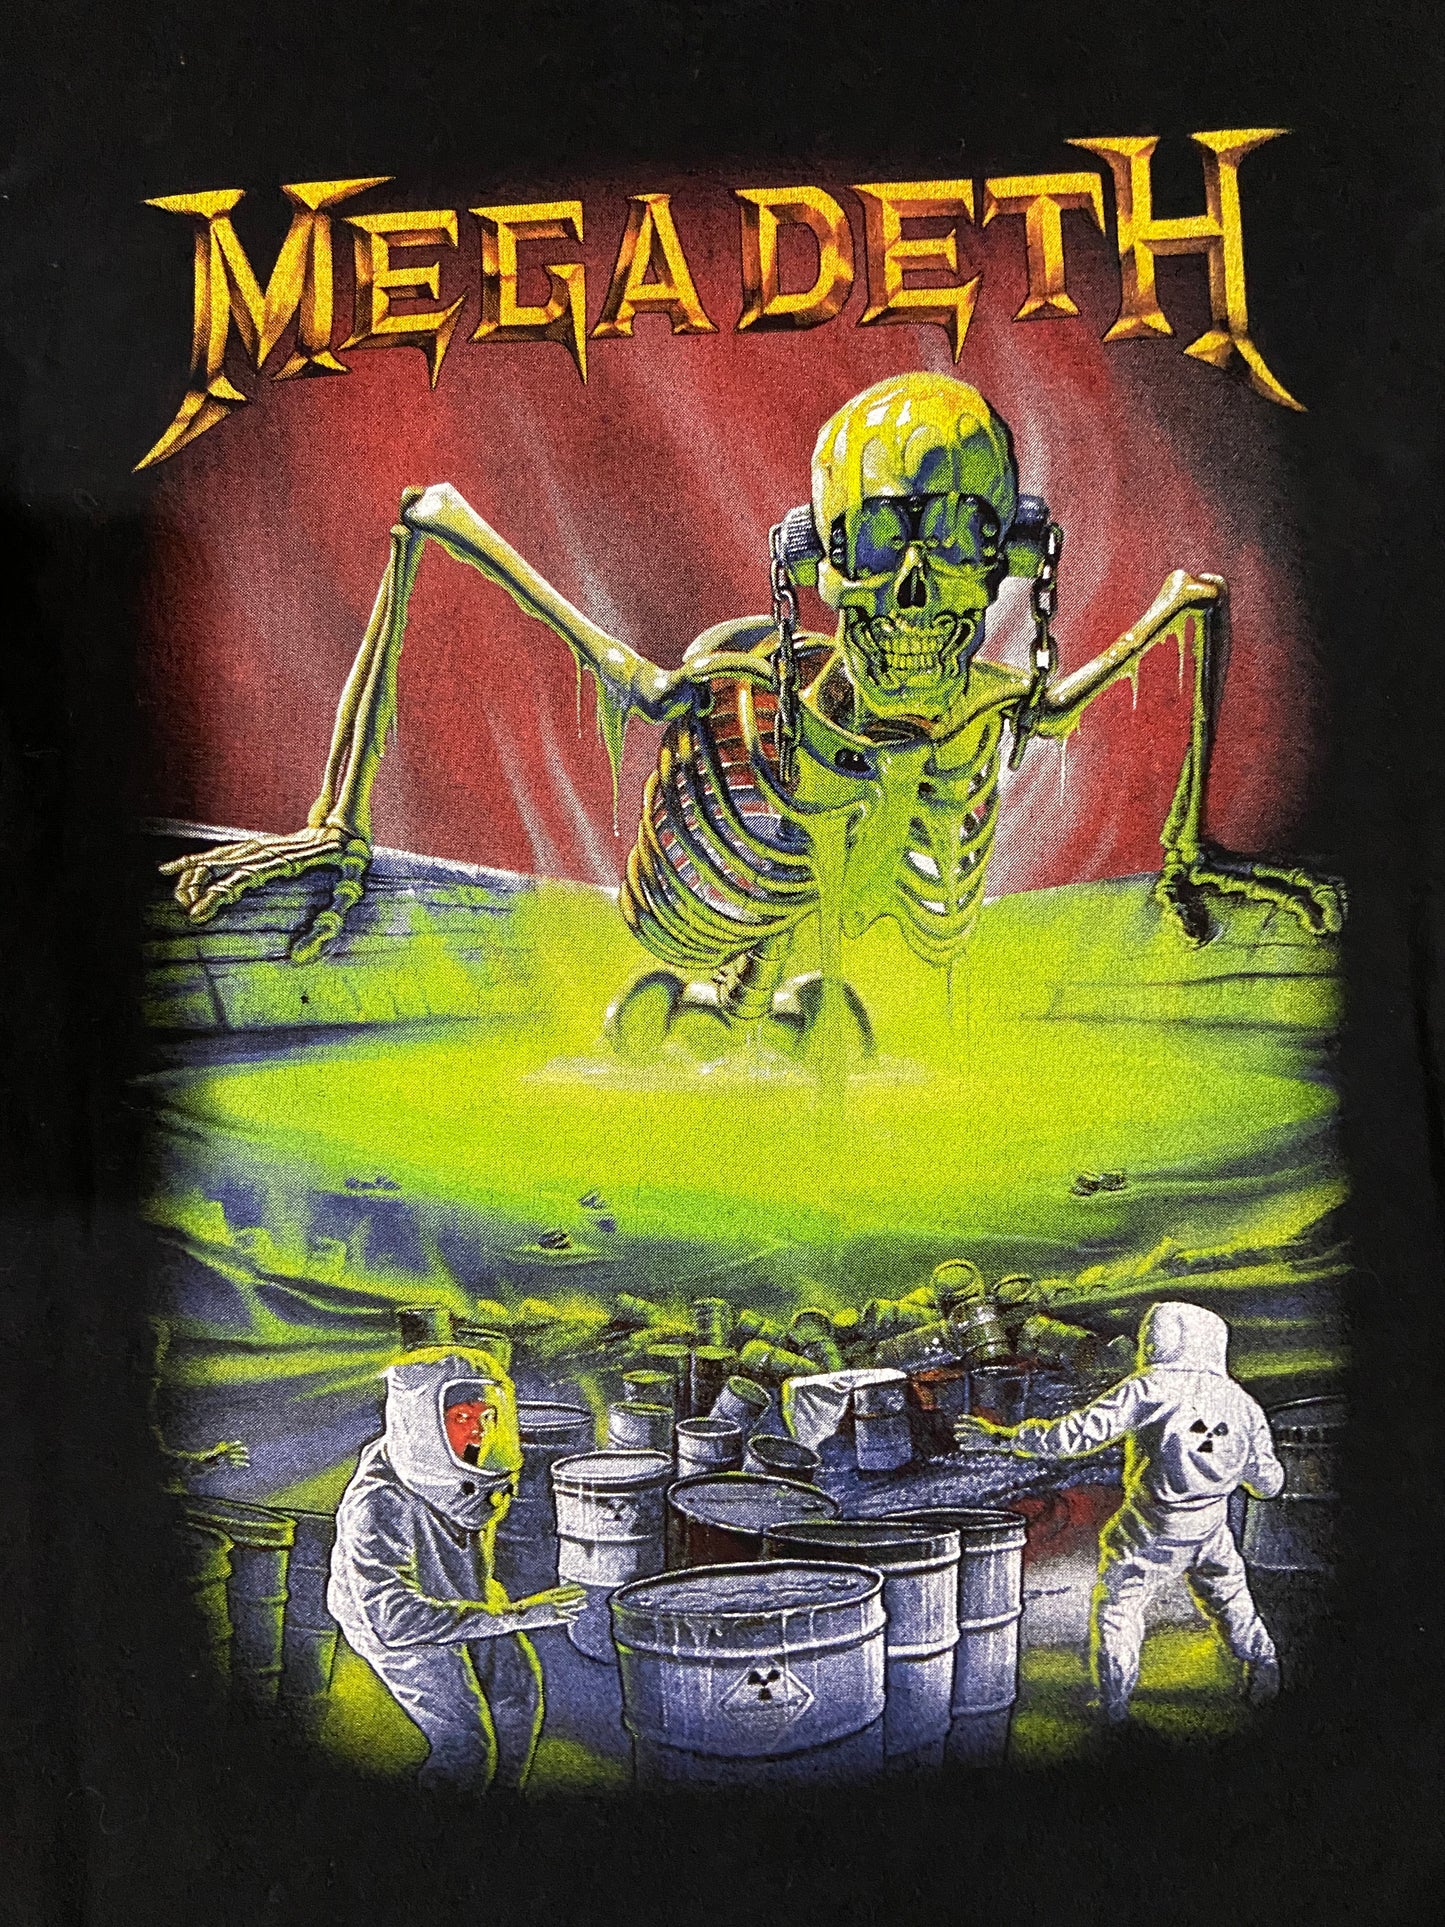 Megadeth "Contaminated" Tour Tee